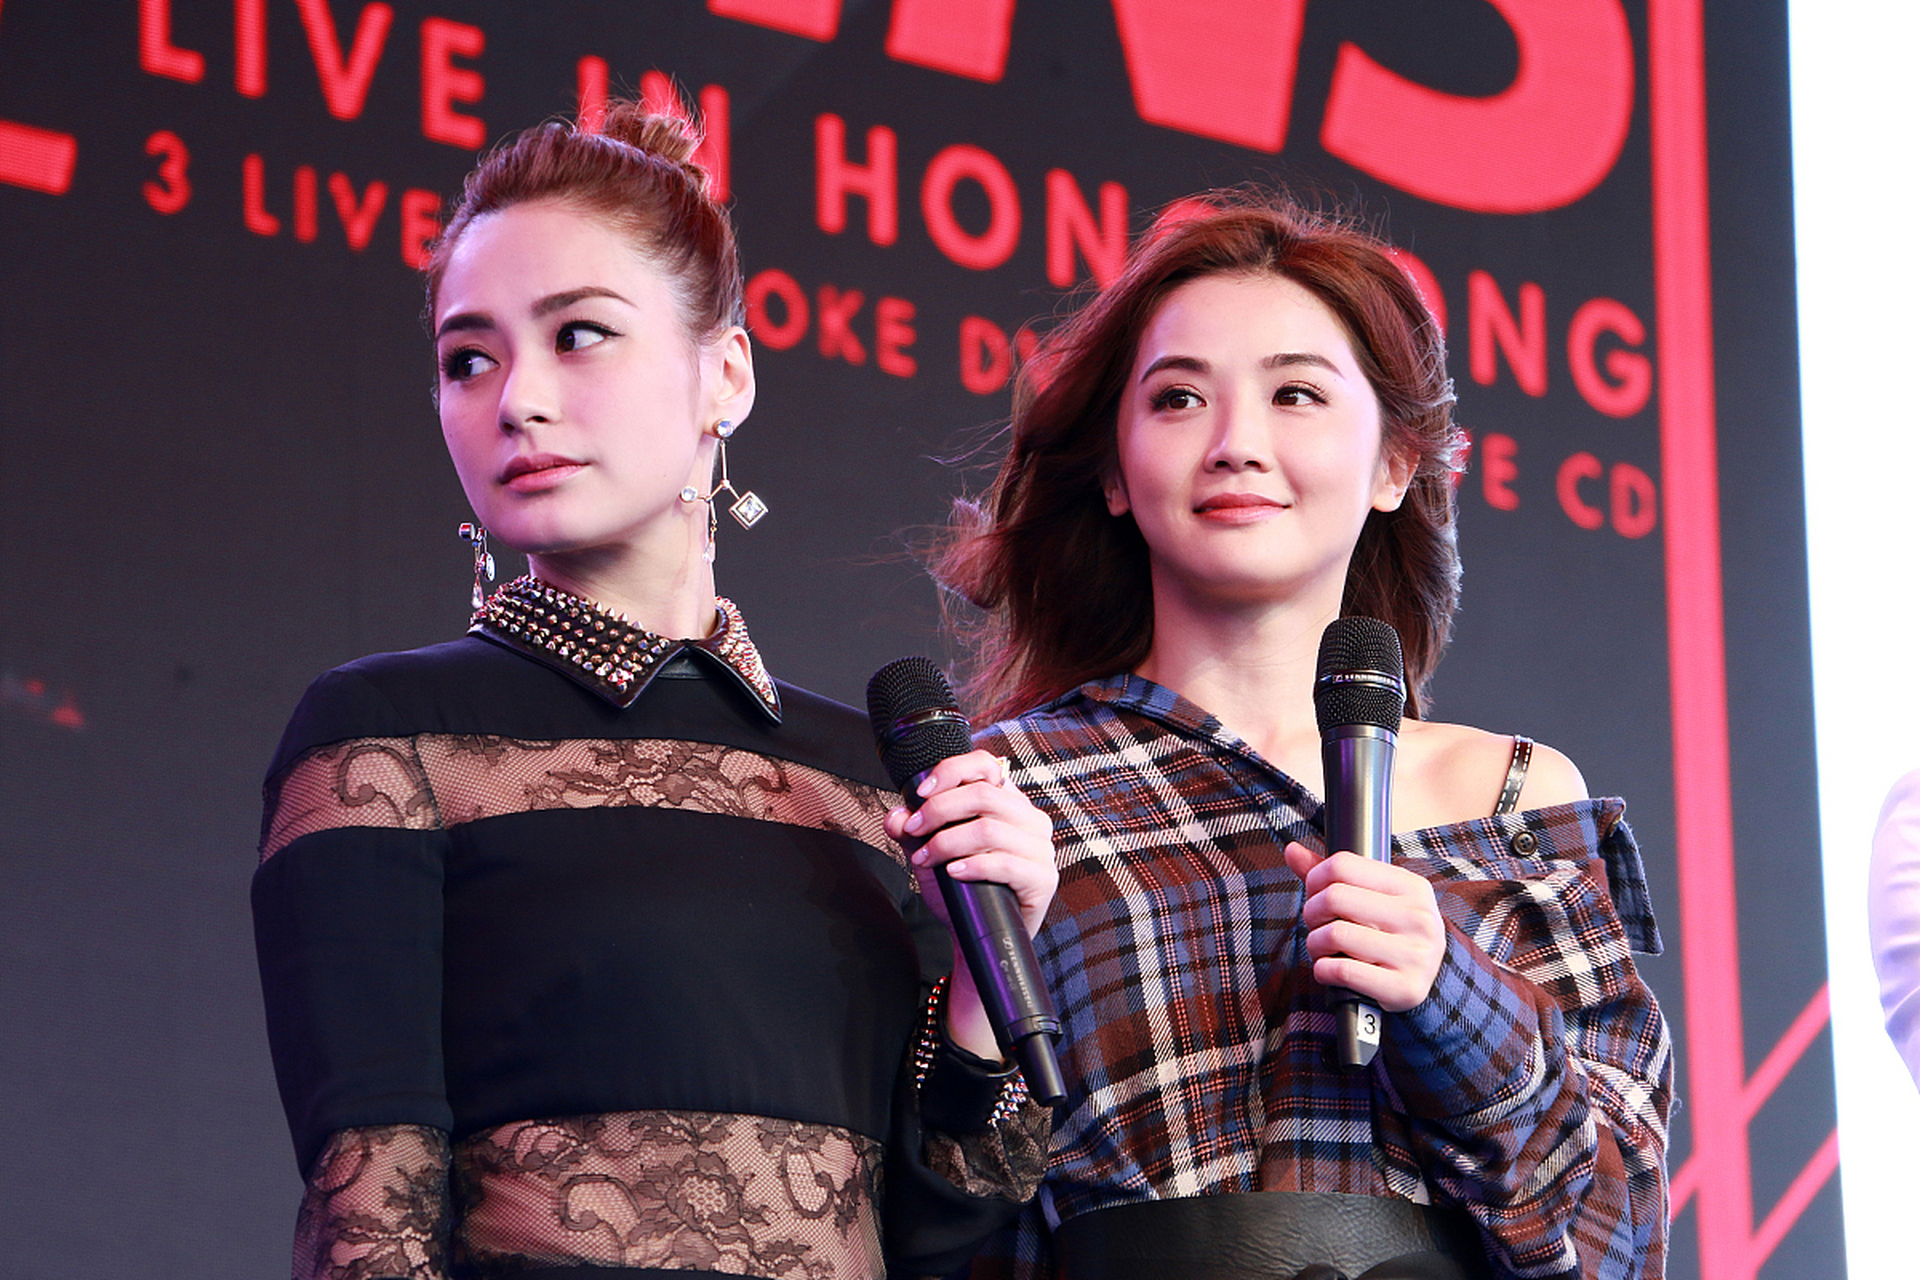 twins是中国香港女子演唱组合,由钟欣潼和蔡卓妍组成,于2003年出道